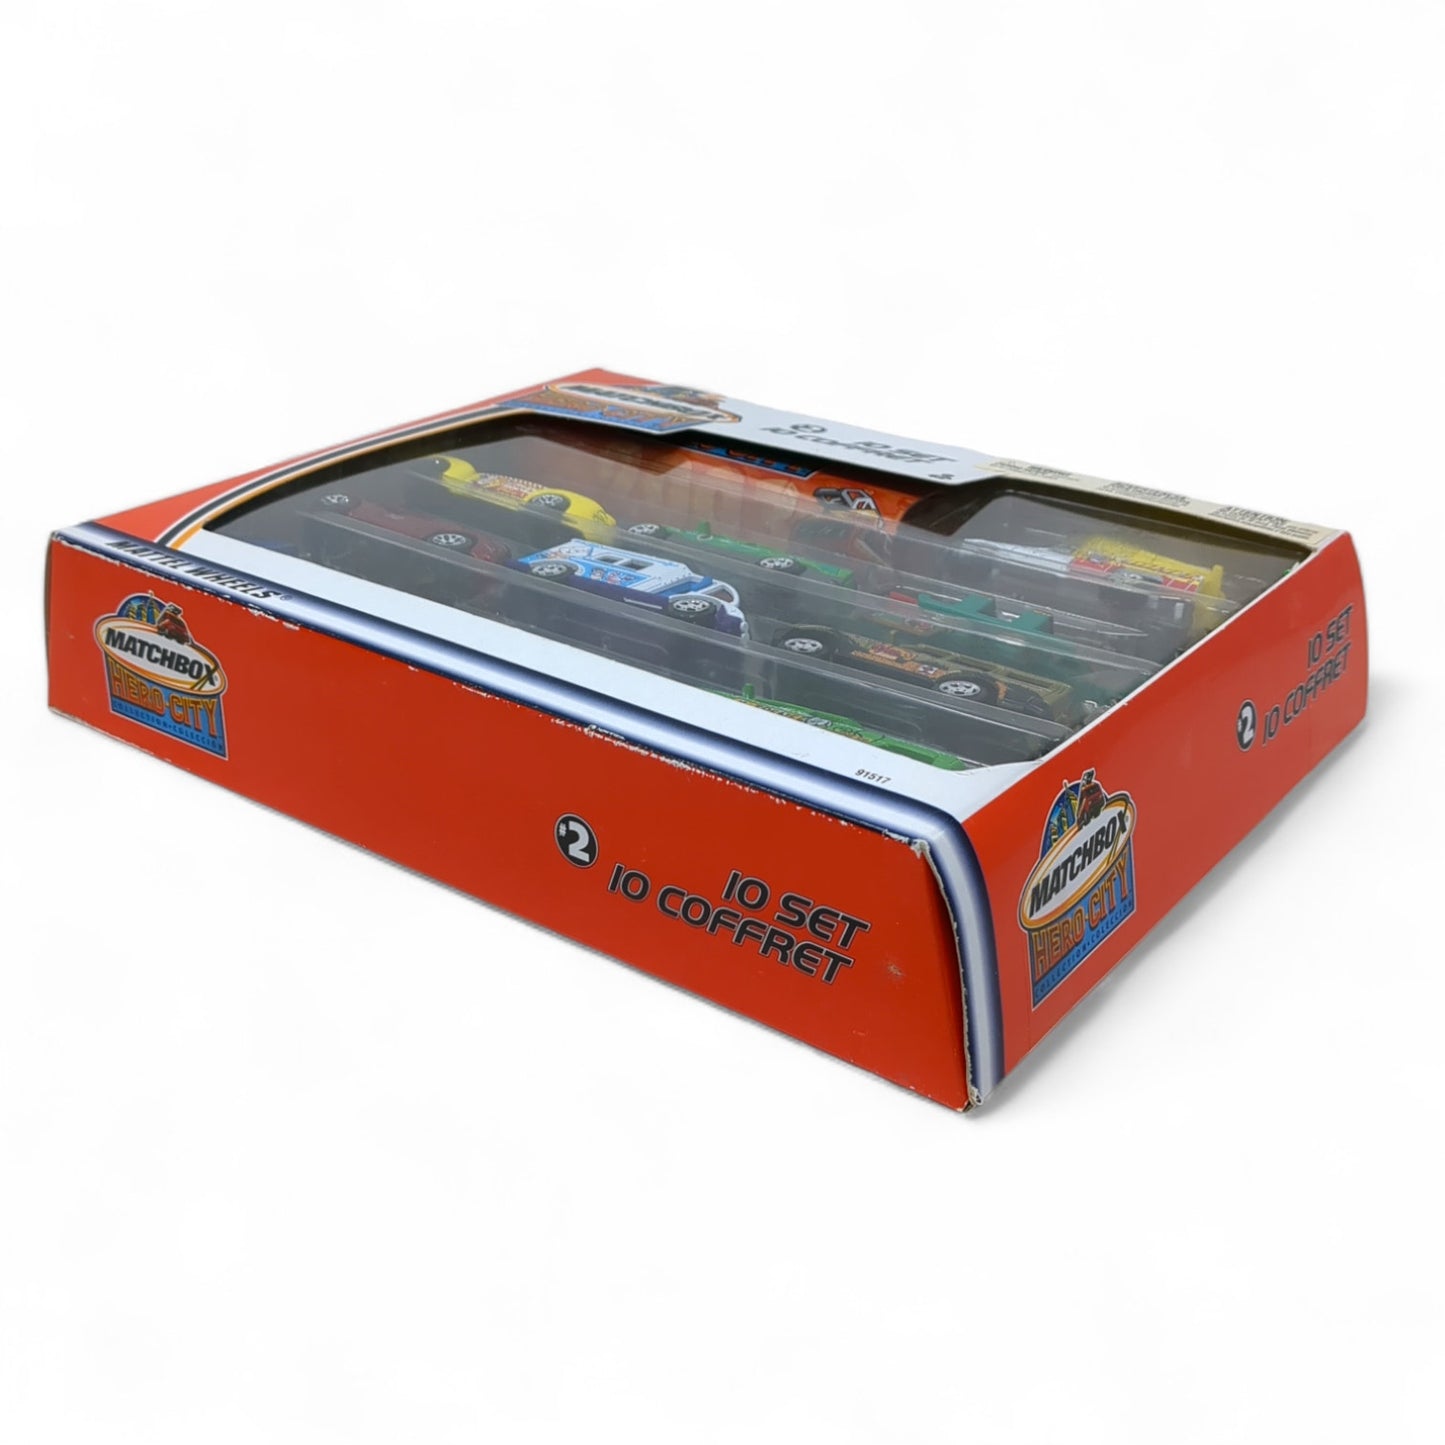 Matchbox Hero City 10 PC Coffret #2 New in Box 2002 Mattel Diecast 91517